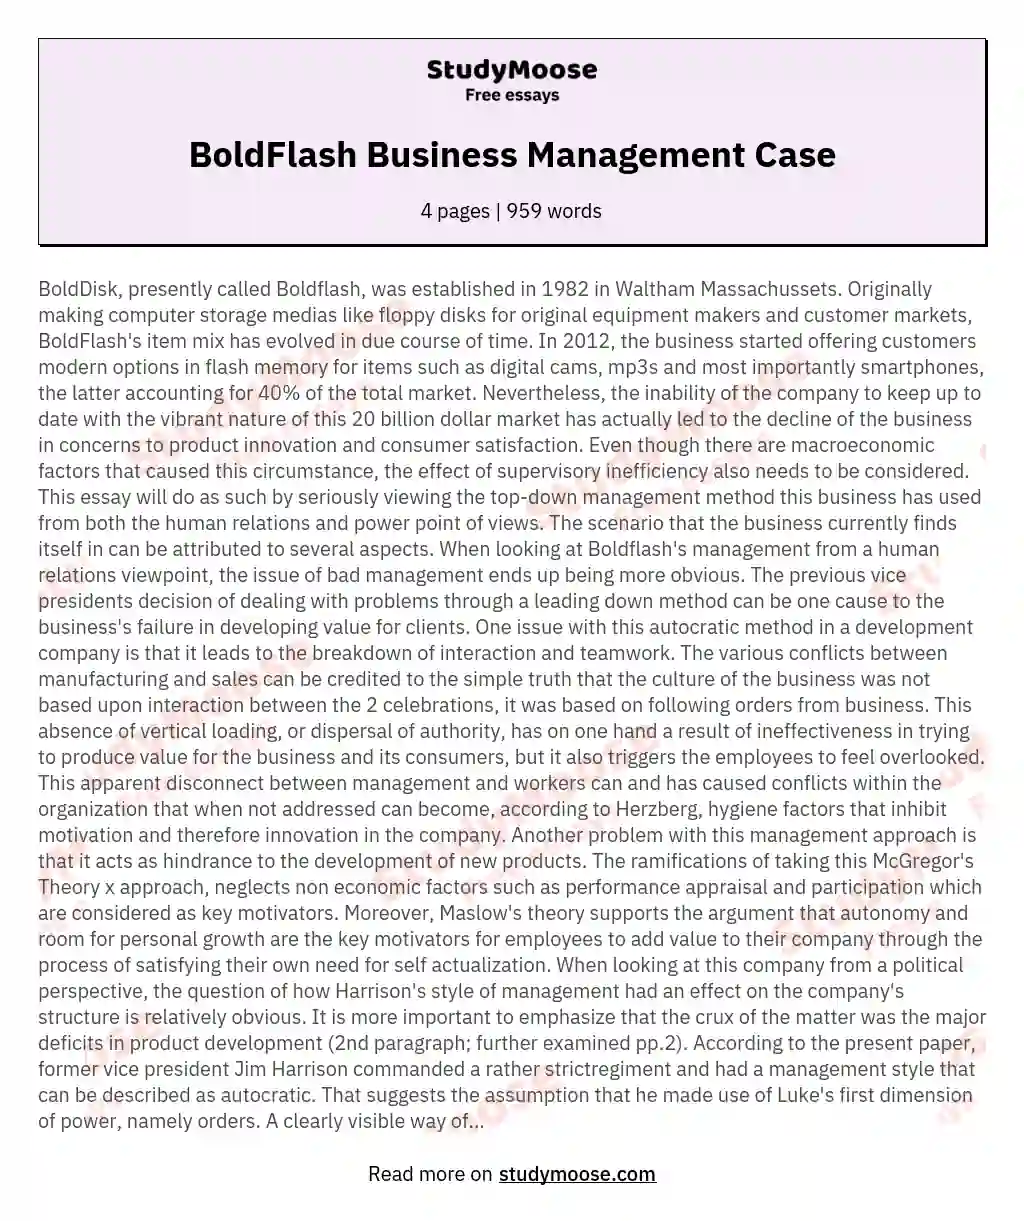 BoldFlash Business Management Case essay